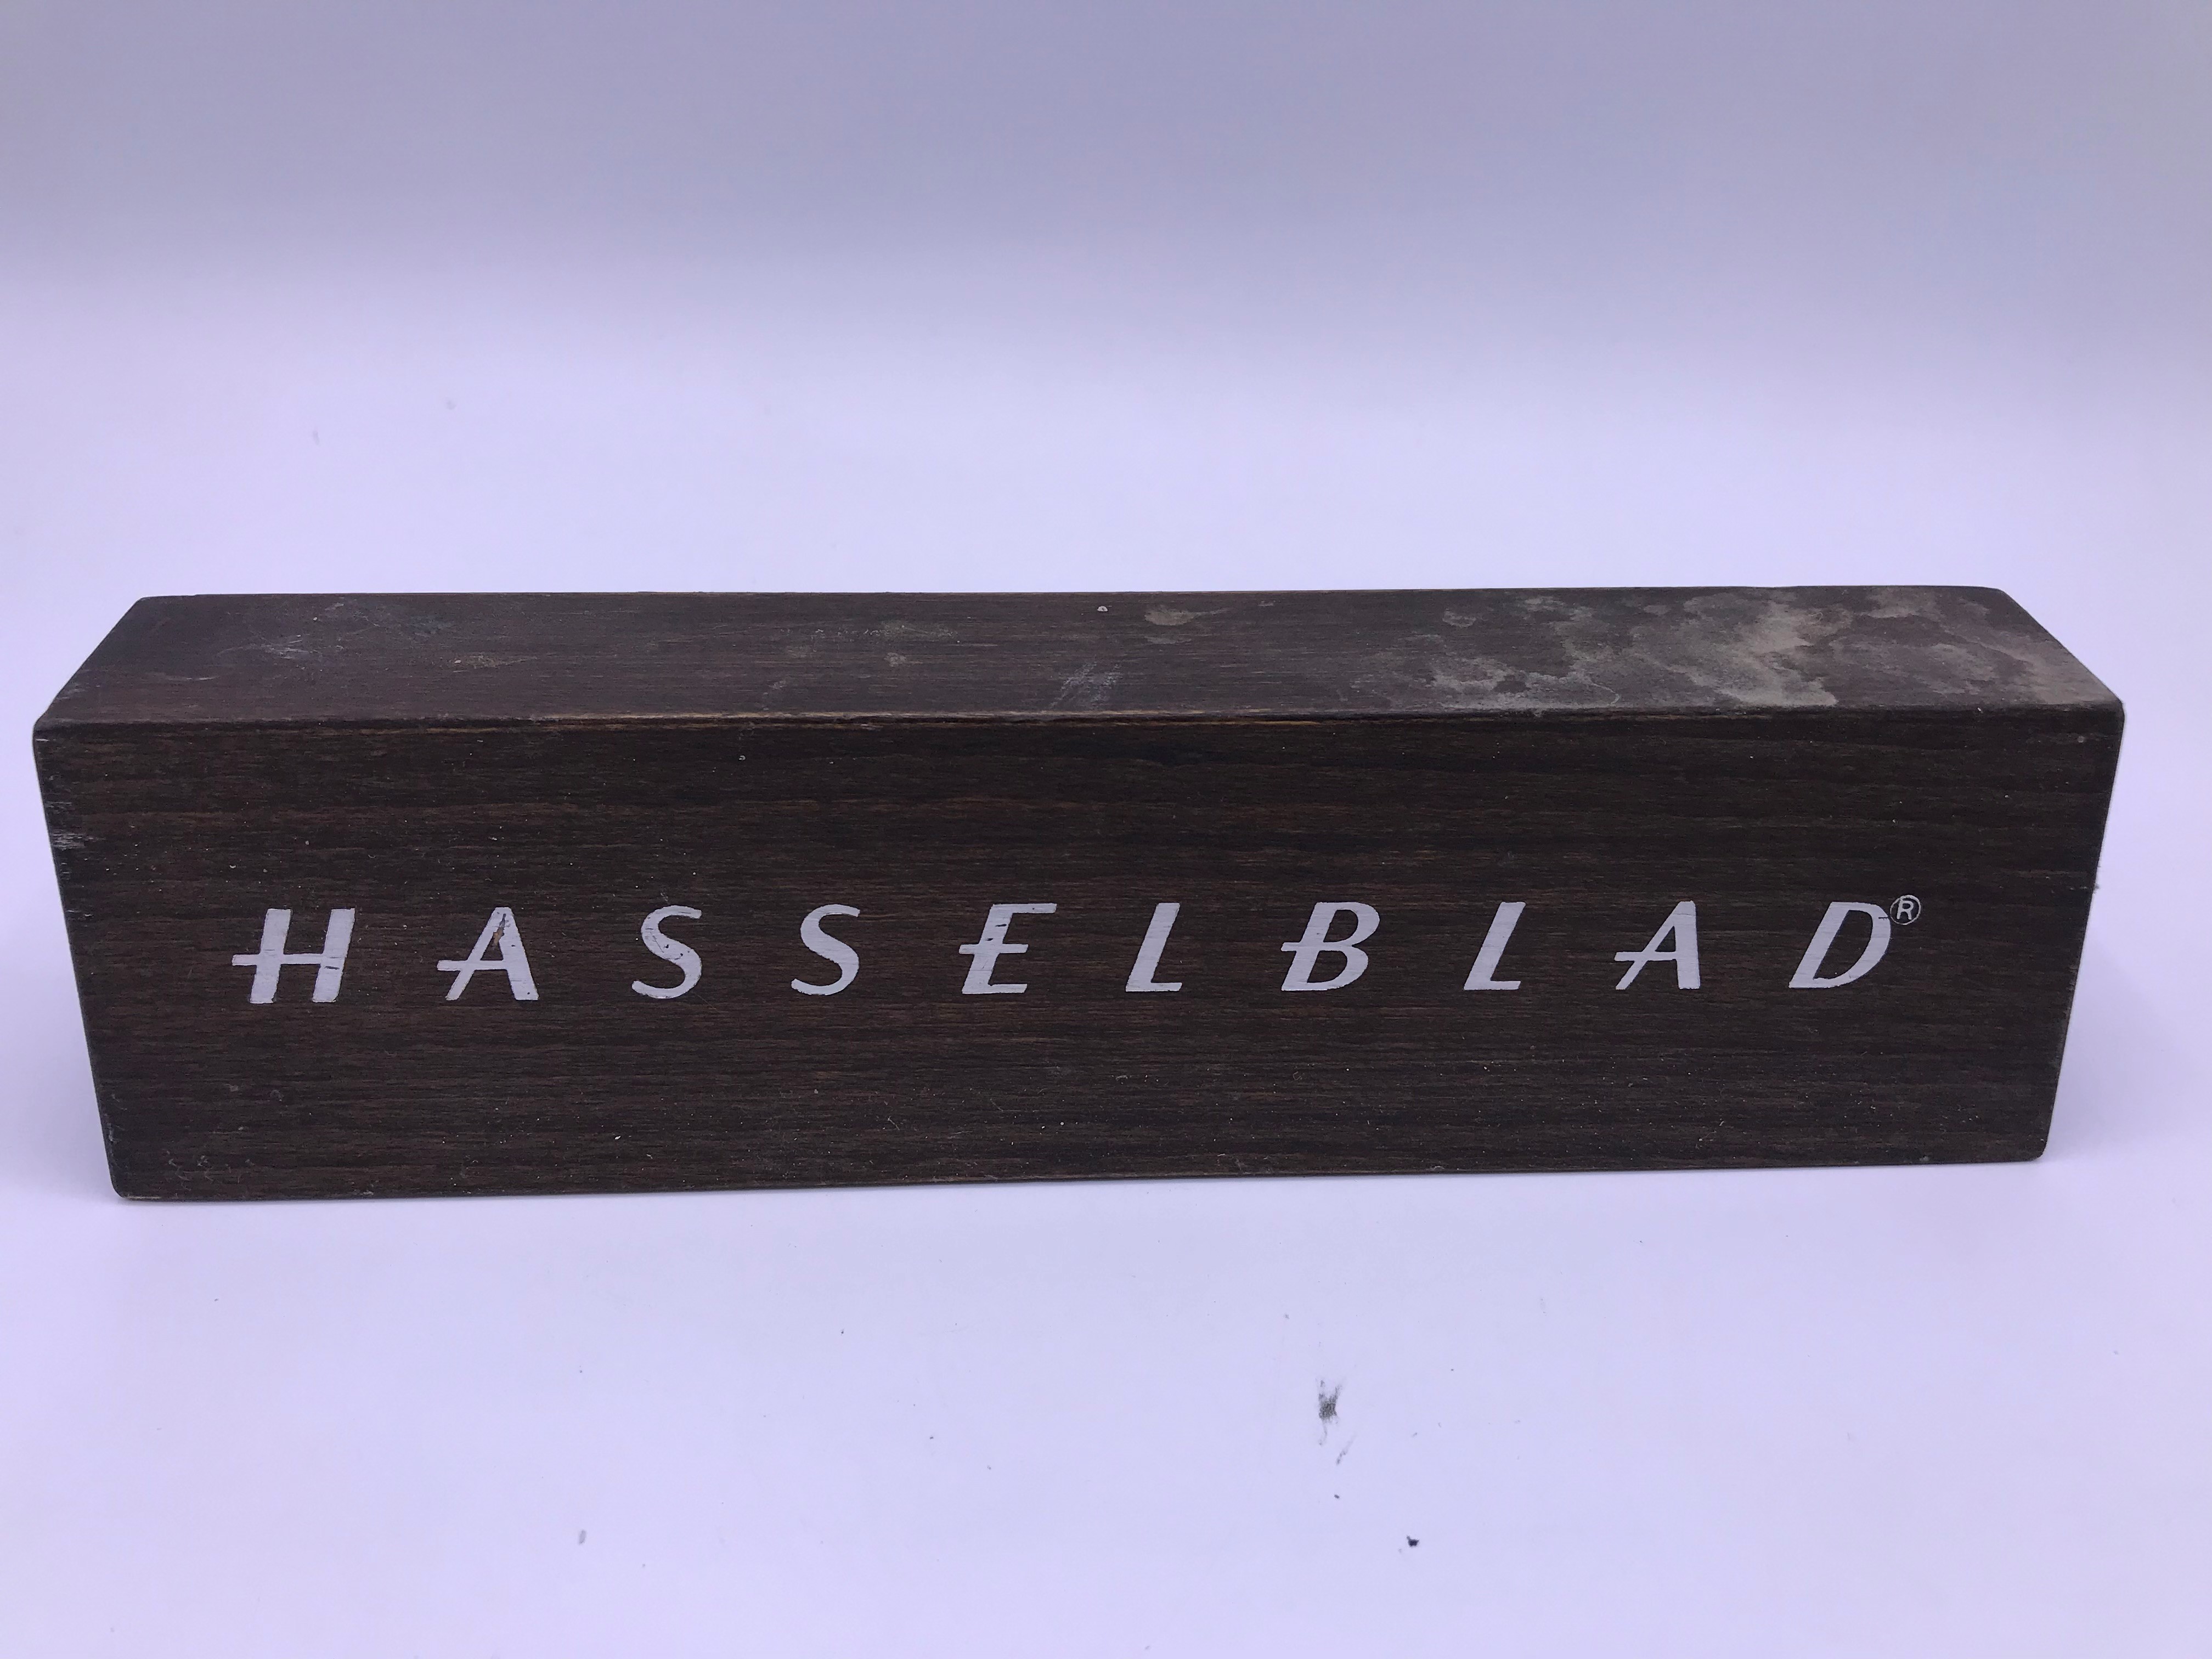 Hasselblad display